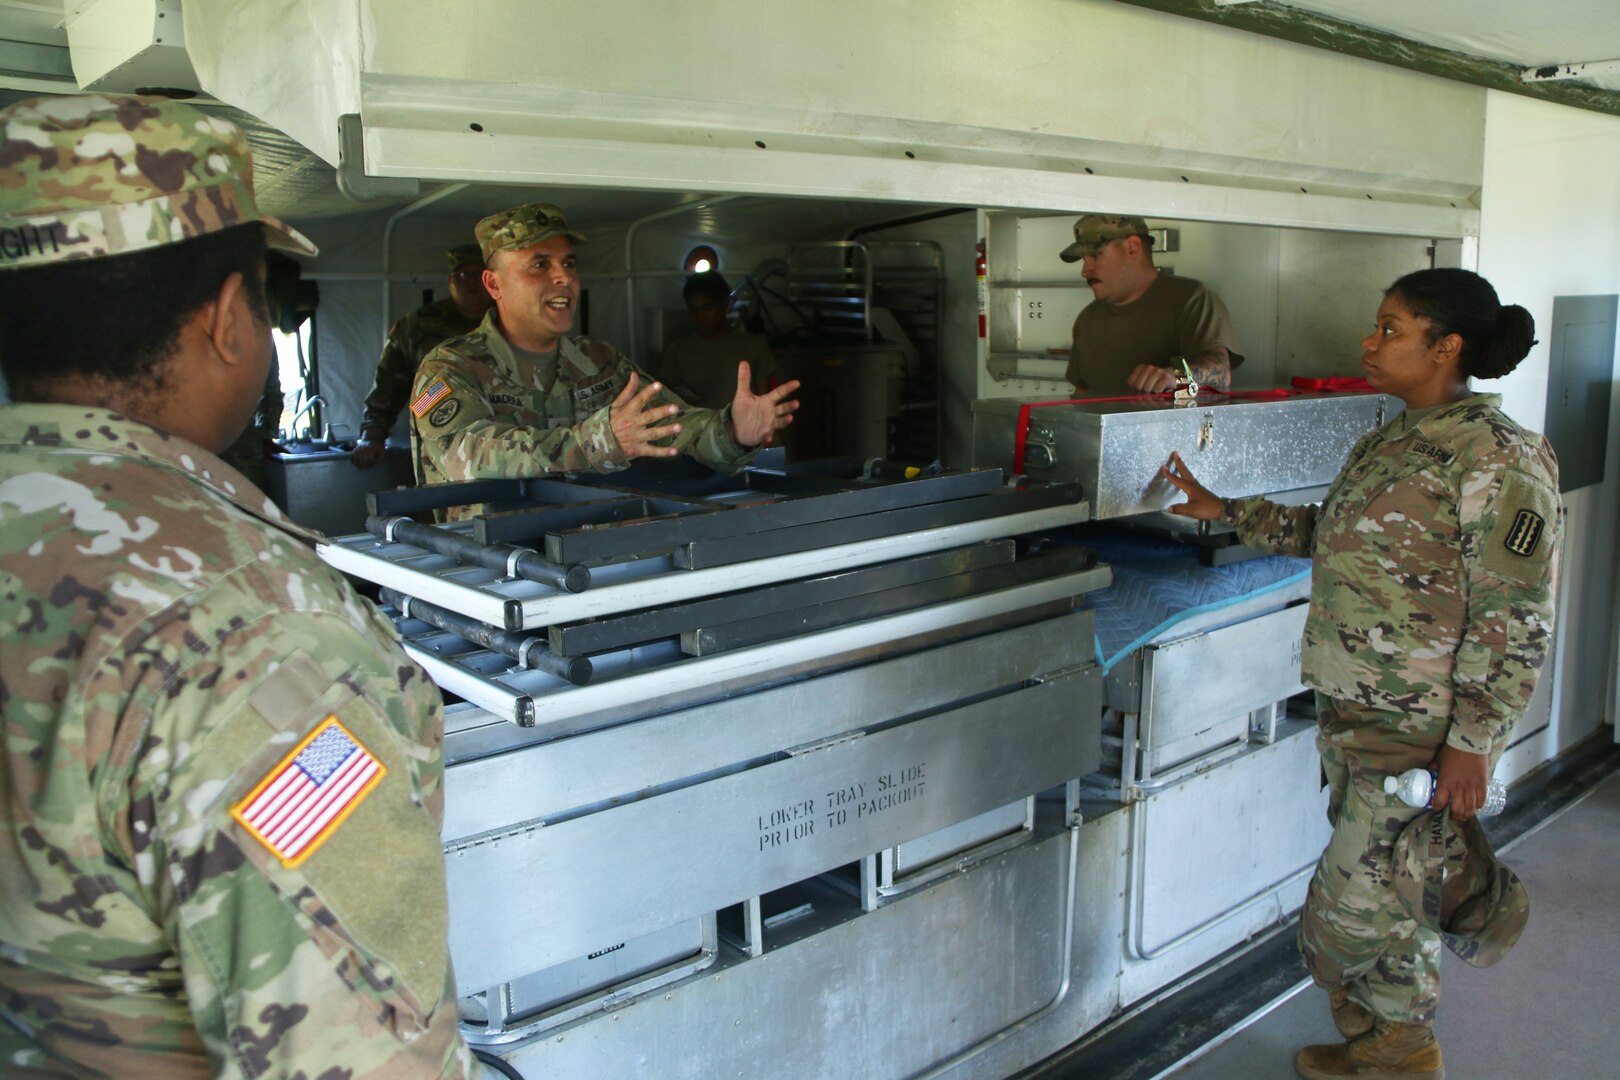 Virginia Army National Guard Soldiers hone skills, increase knowledge at state food service workshop